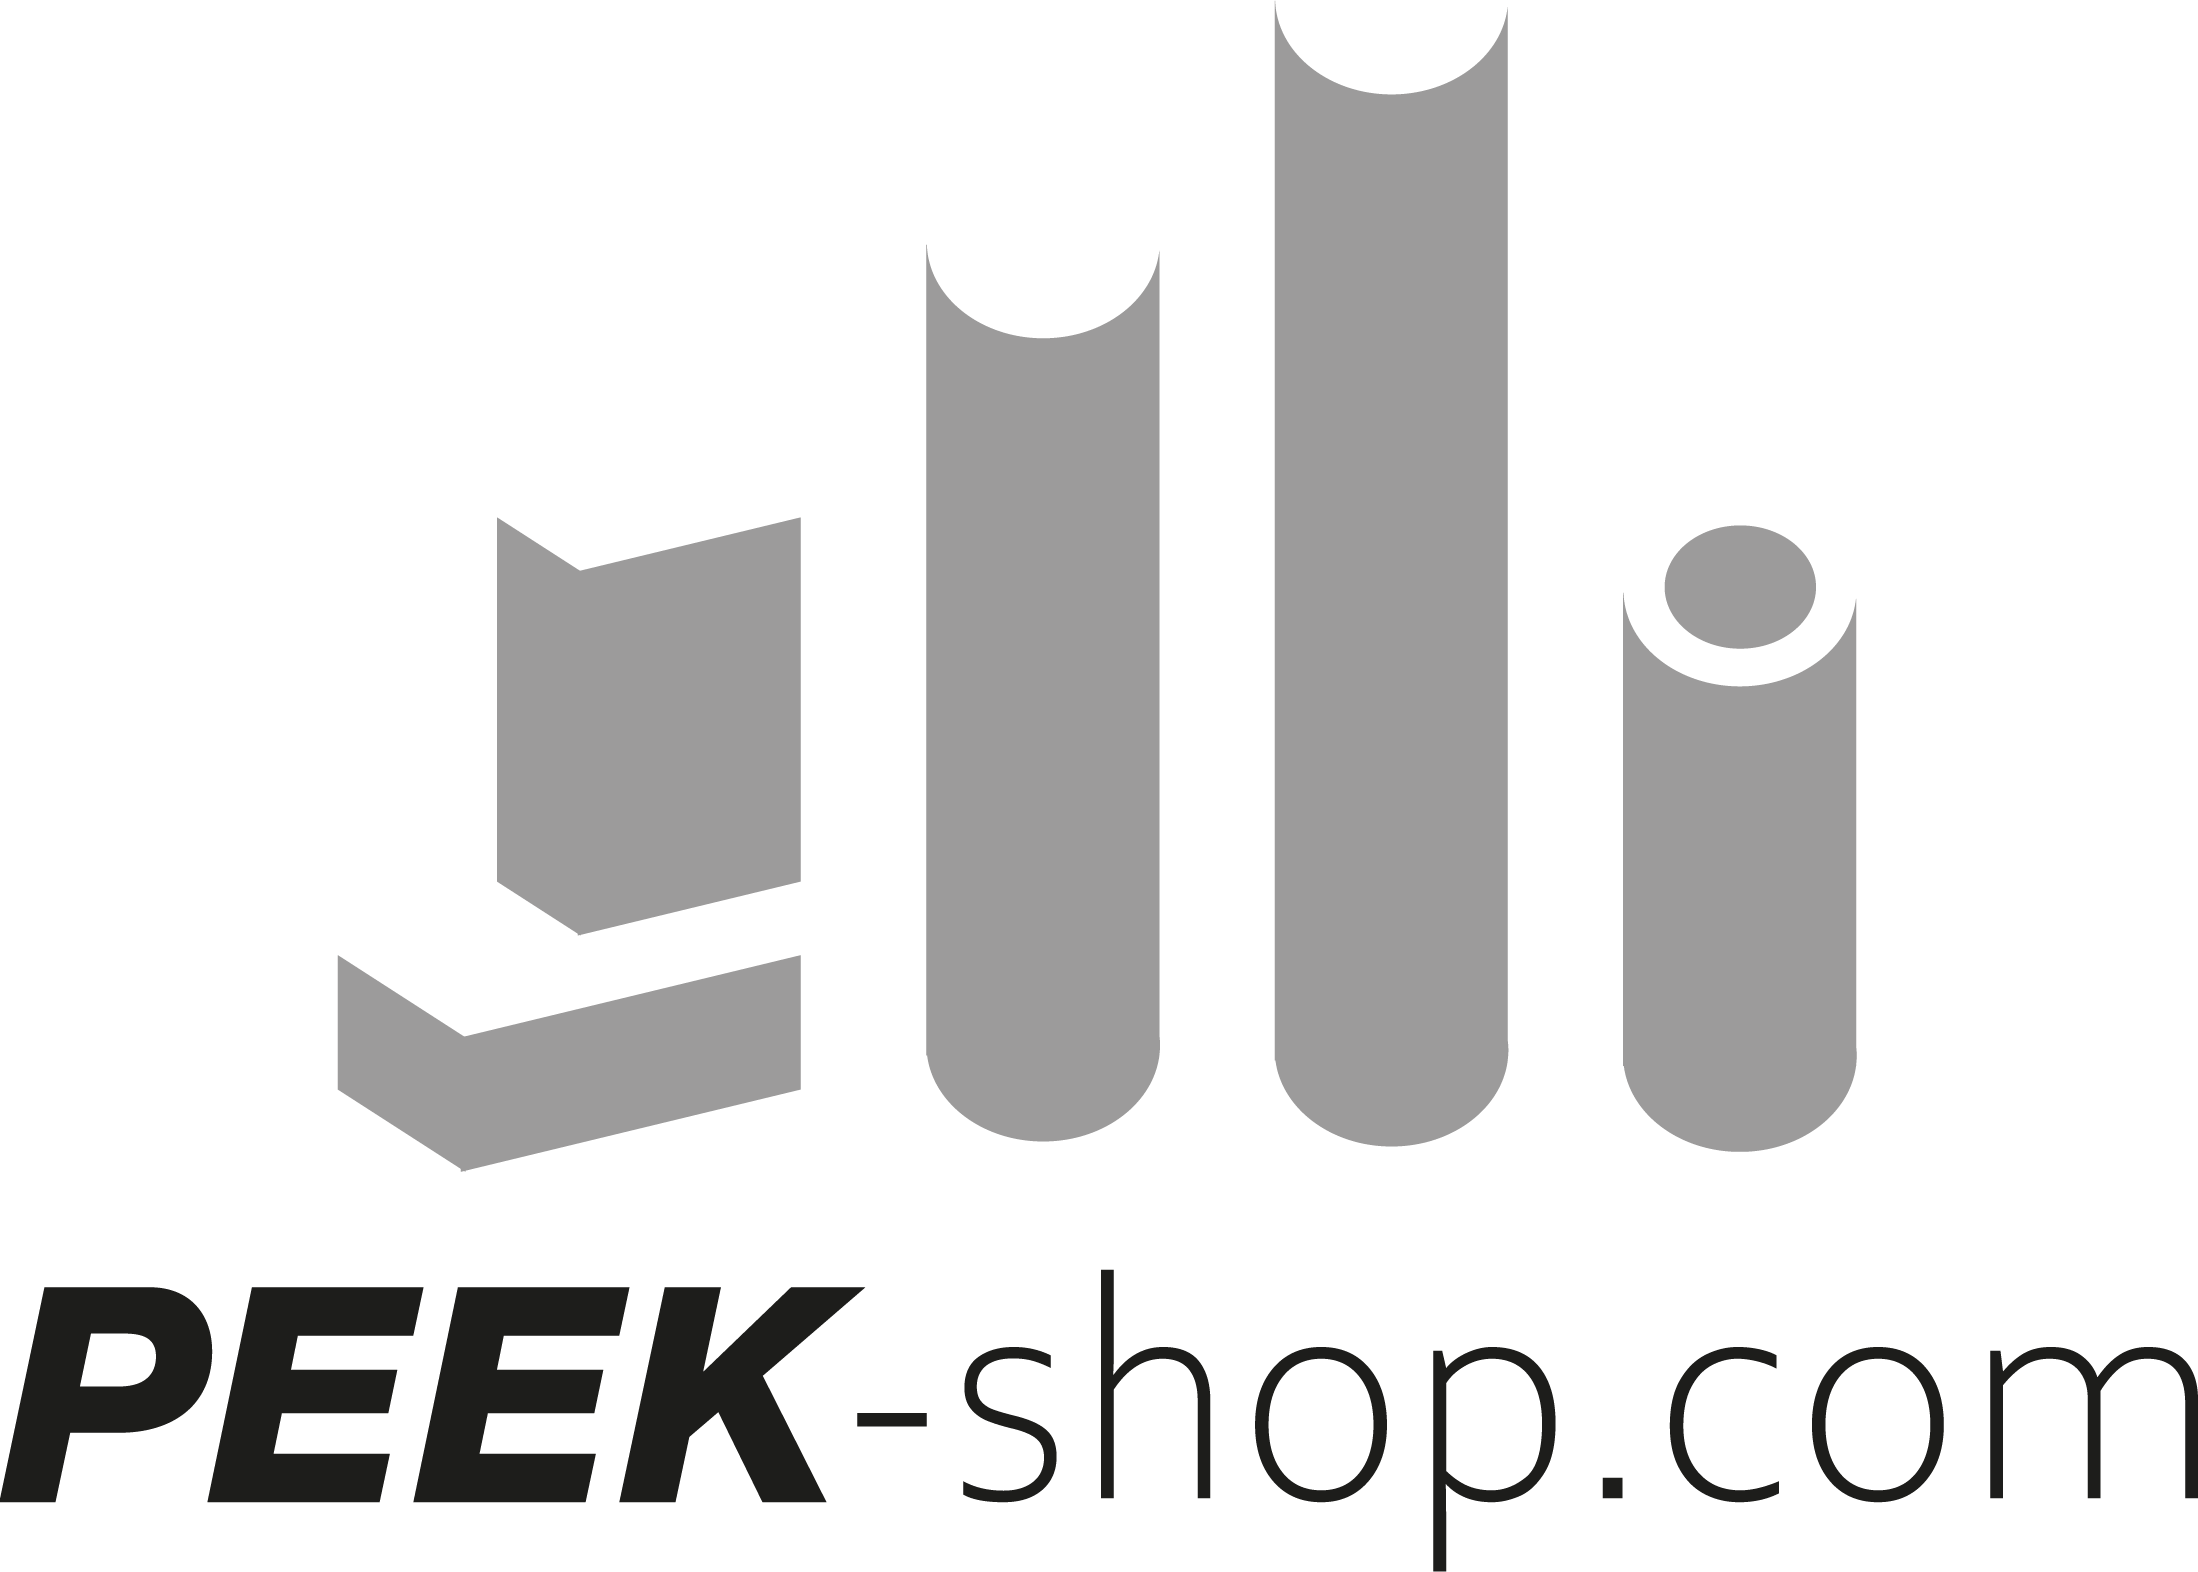 PEEKshop.com transparent logo on webshop 2